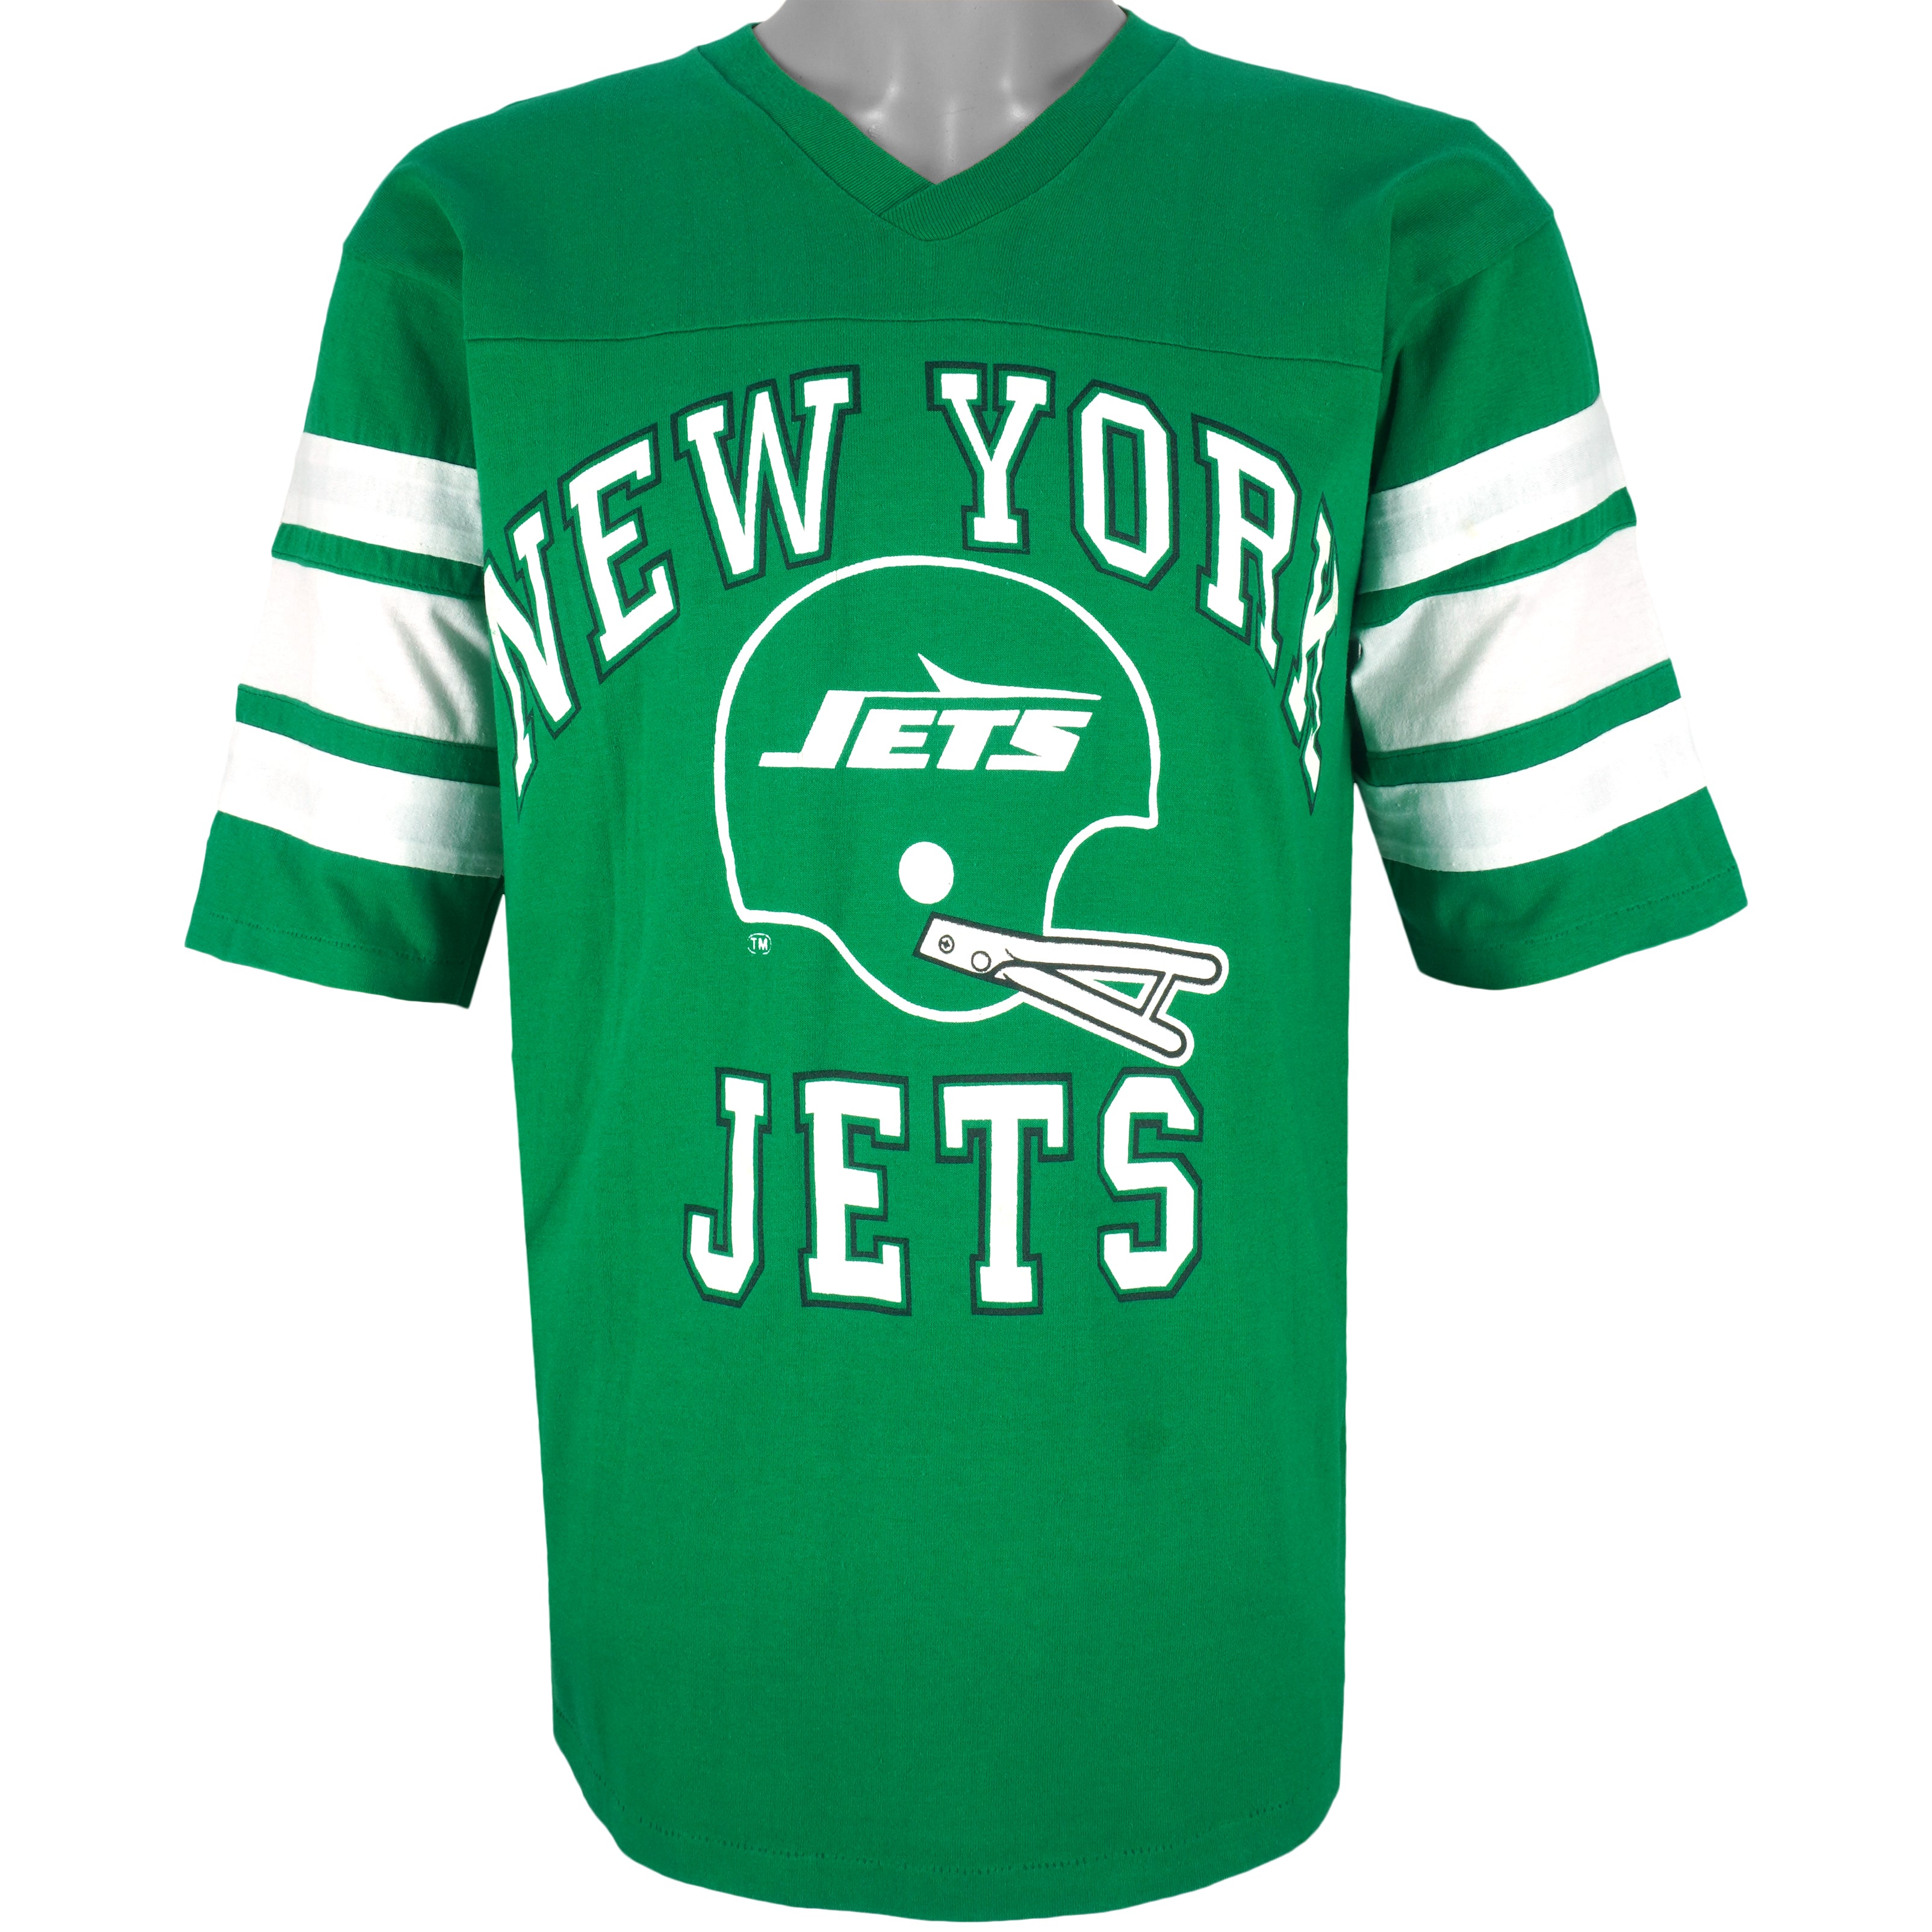 Vintage NFL Adidas New York Jets Green Jersey